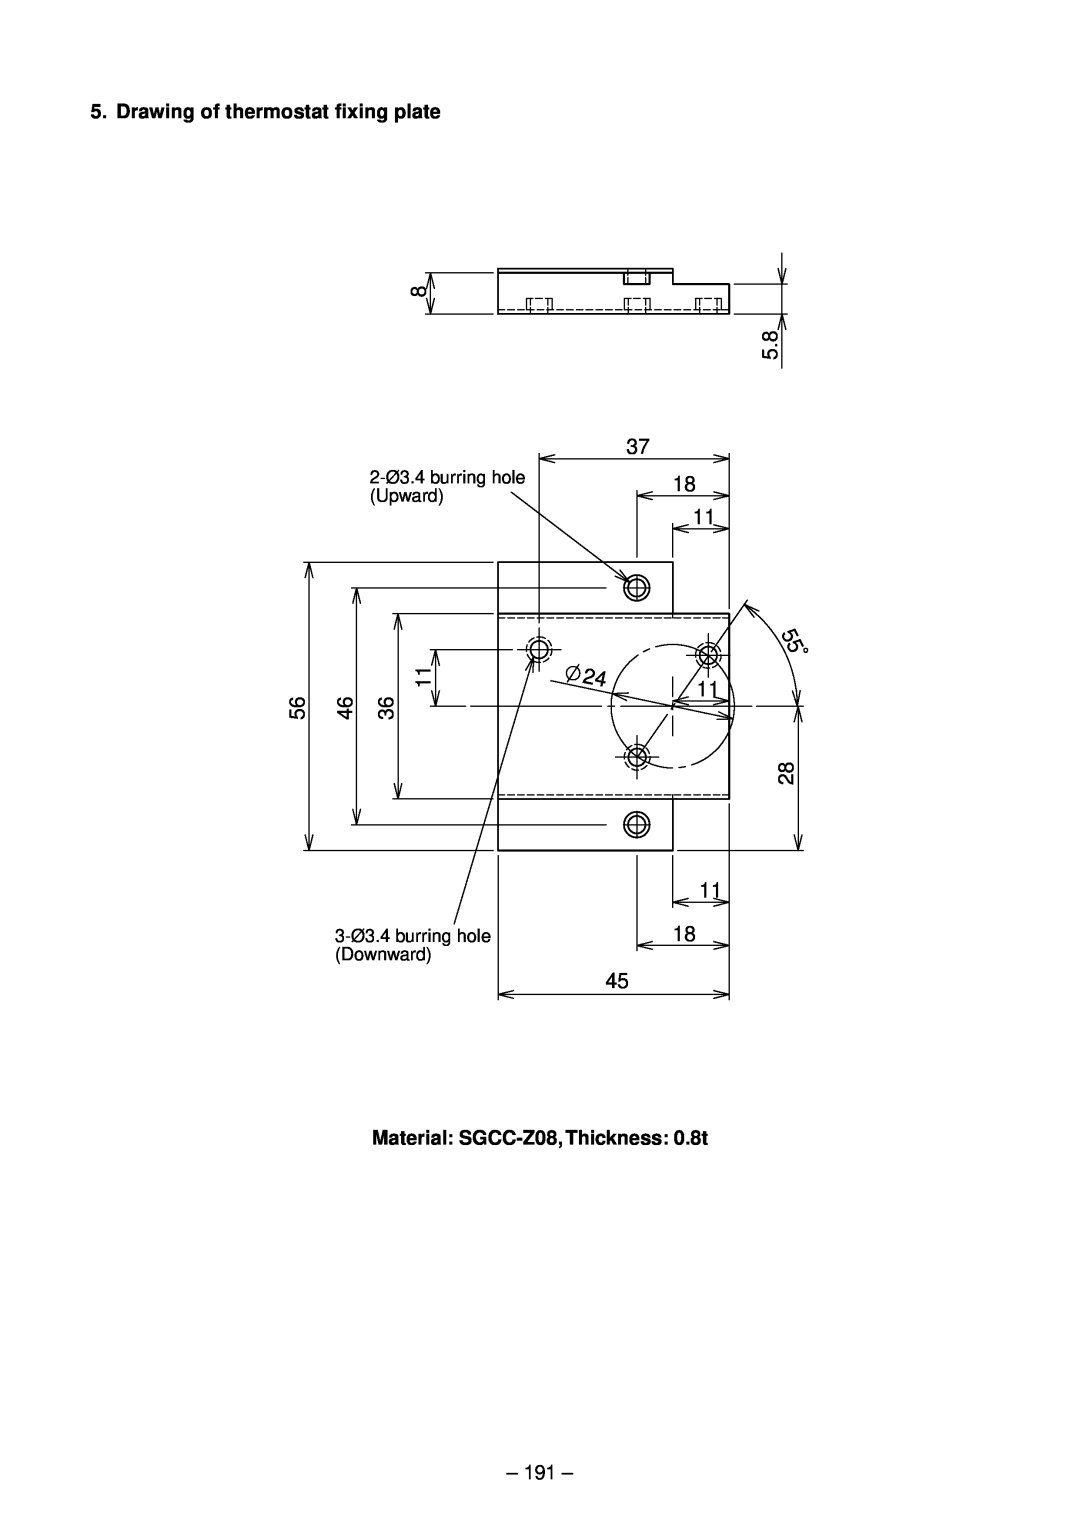 Toshiba RAV-SM802BT-E Drawing of thermostat fixing plate, Material SGCC-Z08, Thickness 0.8t, 2-Ø3.4 burring hole, Upward 